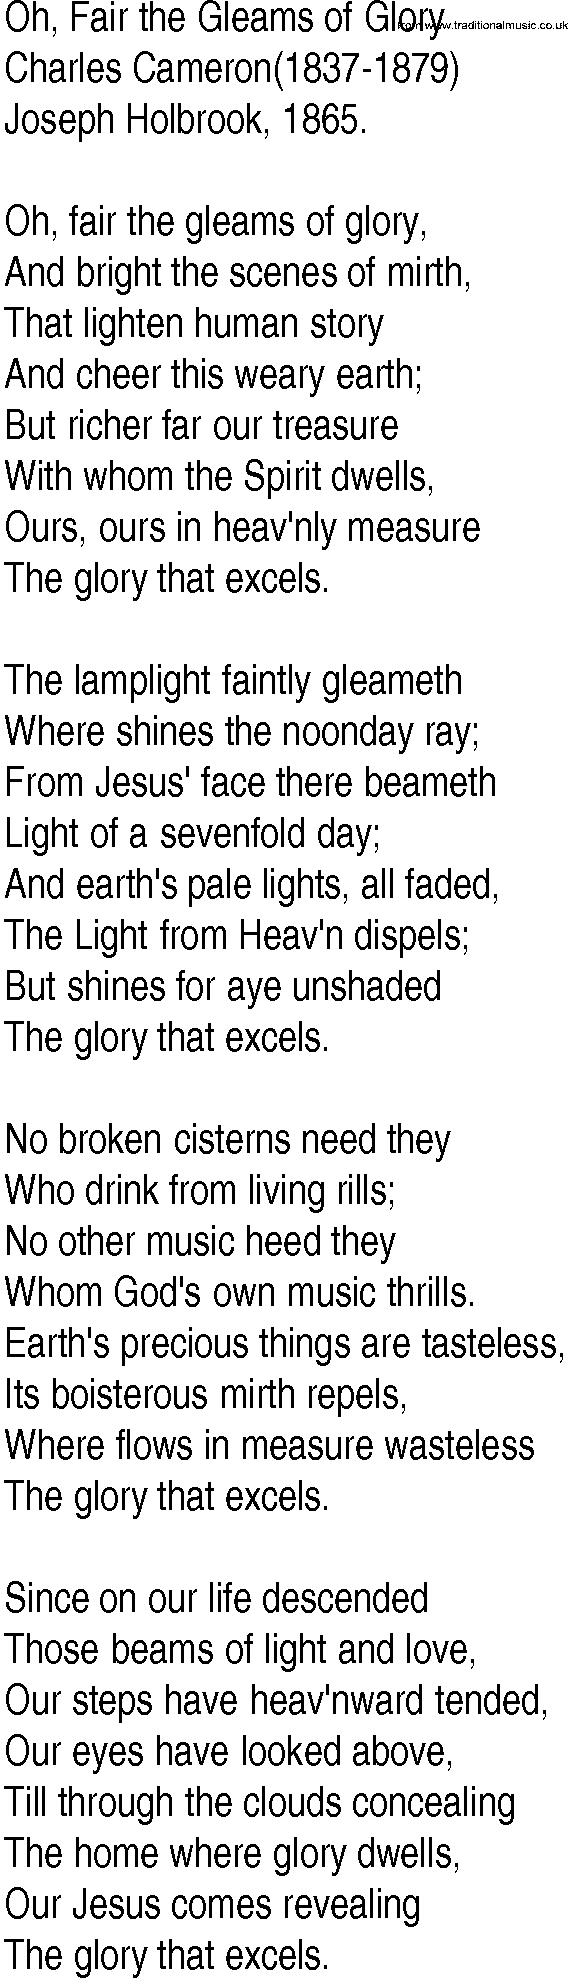 Hymn and Gospel Song: Oh, Fair the Gleams of Glory by Charles Cameron lyrics